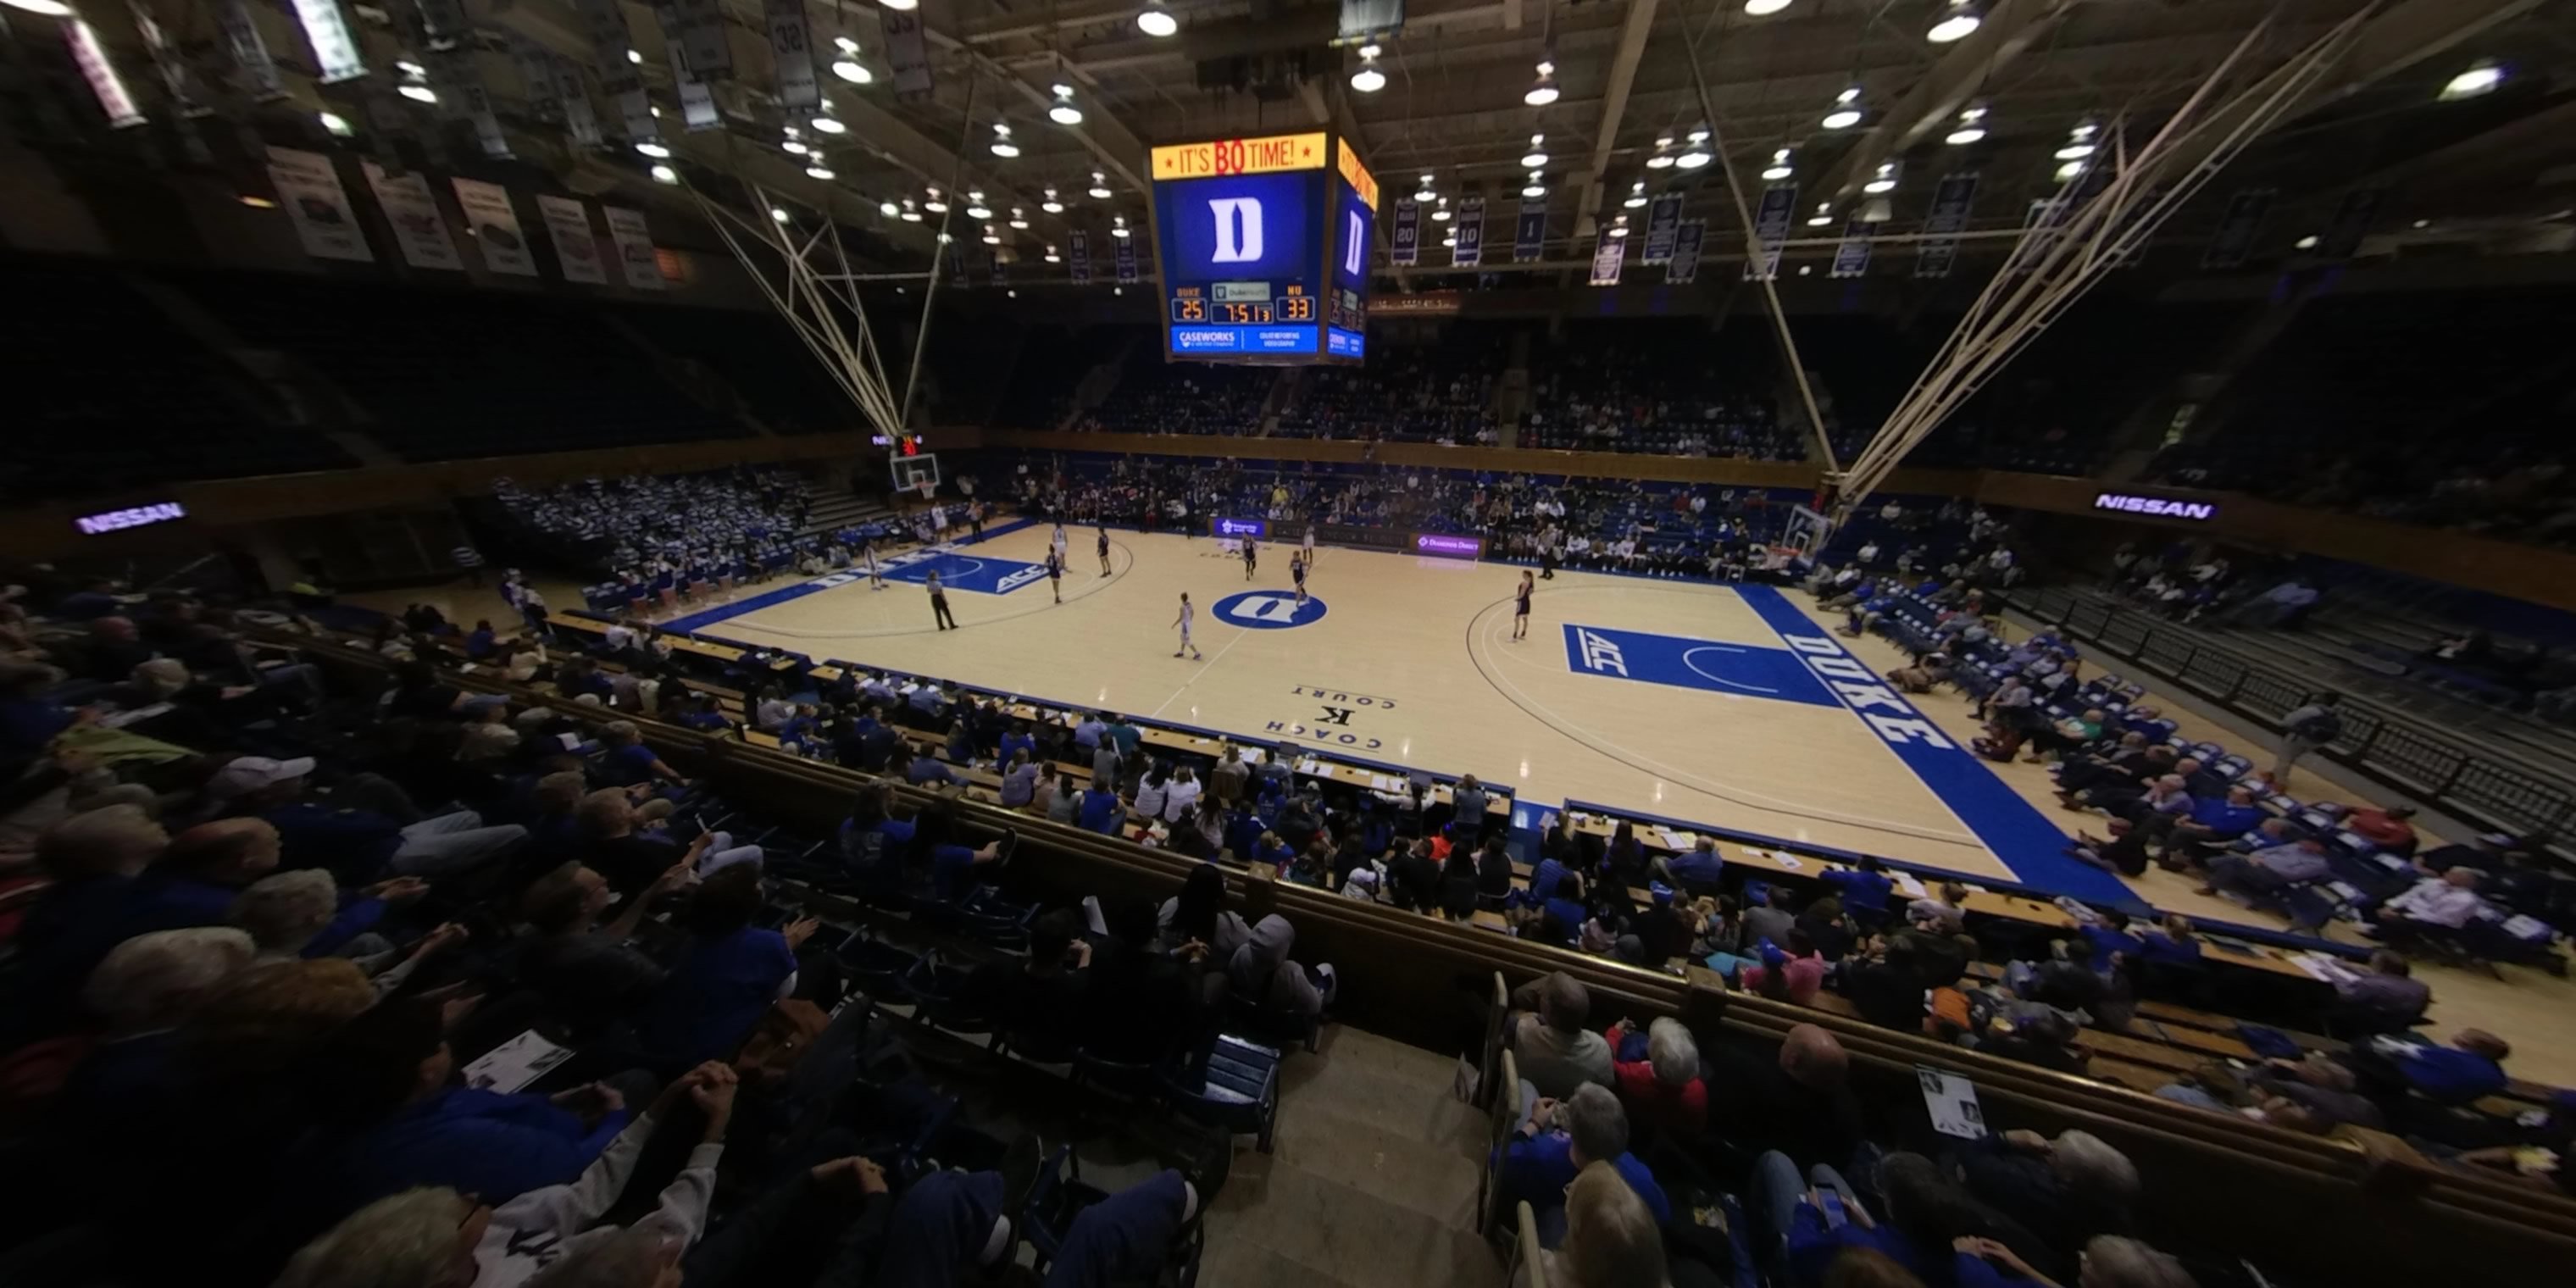 section 15 panoramic seat view  - cameron indoor stadium